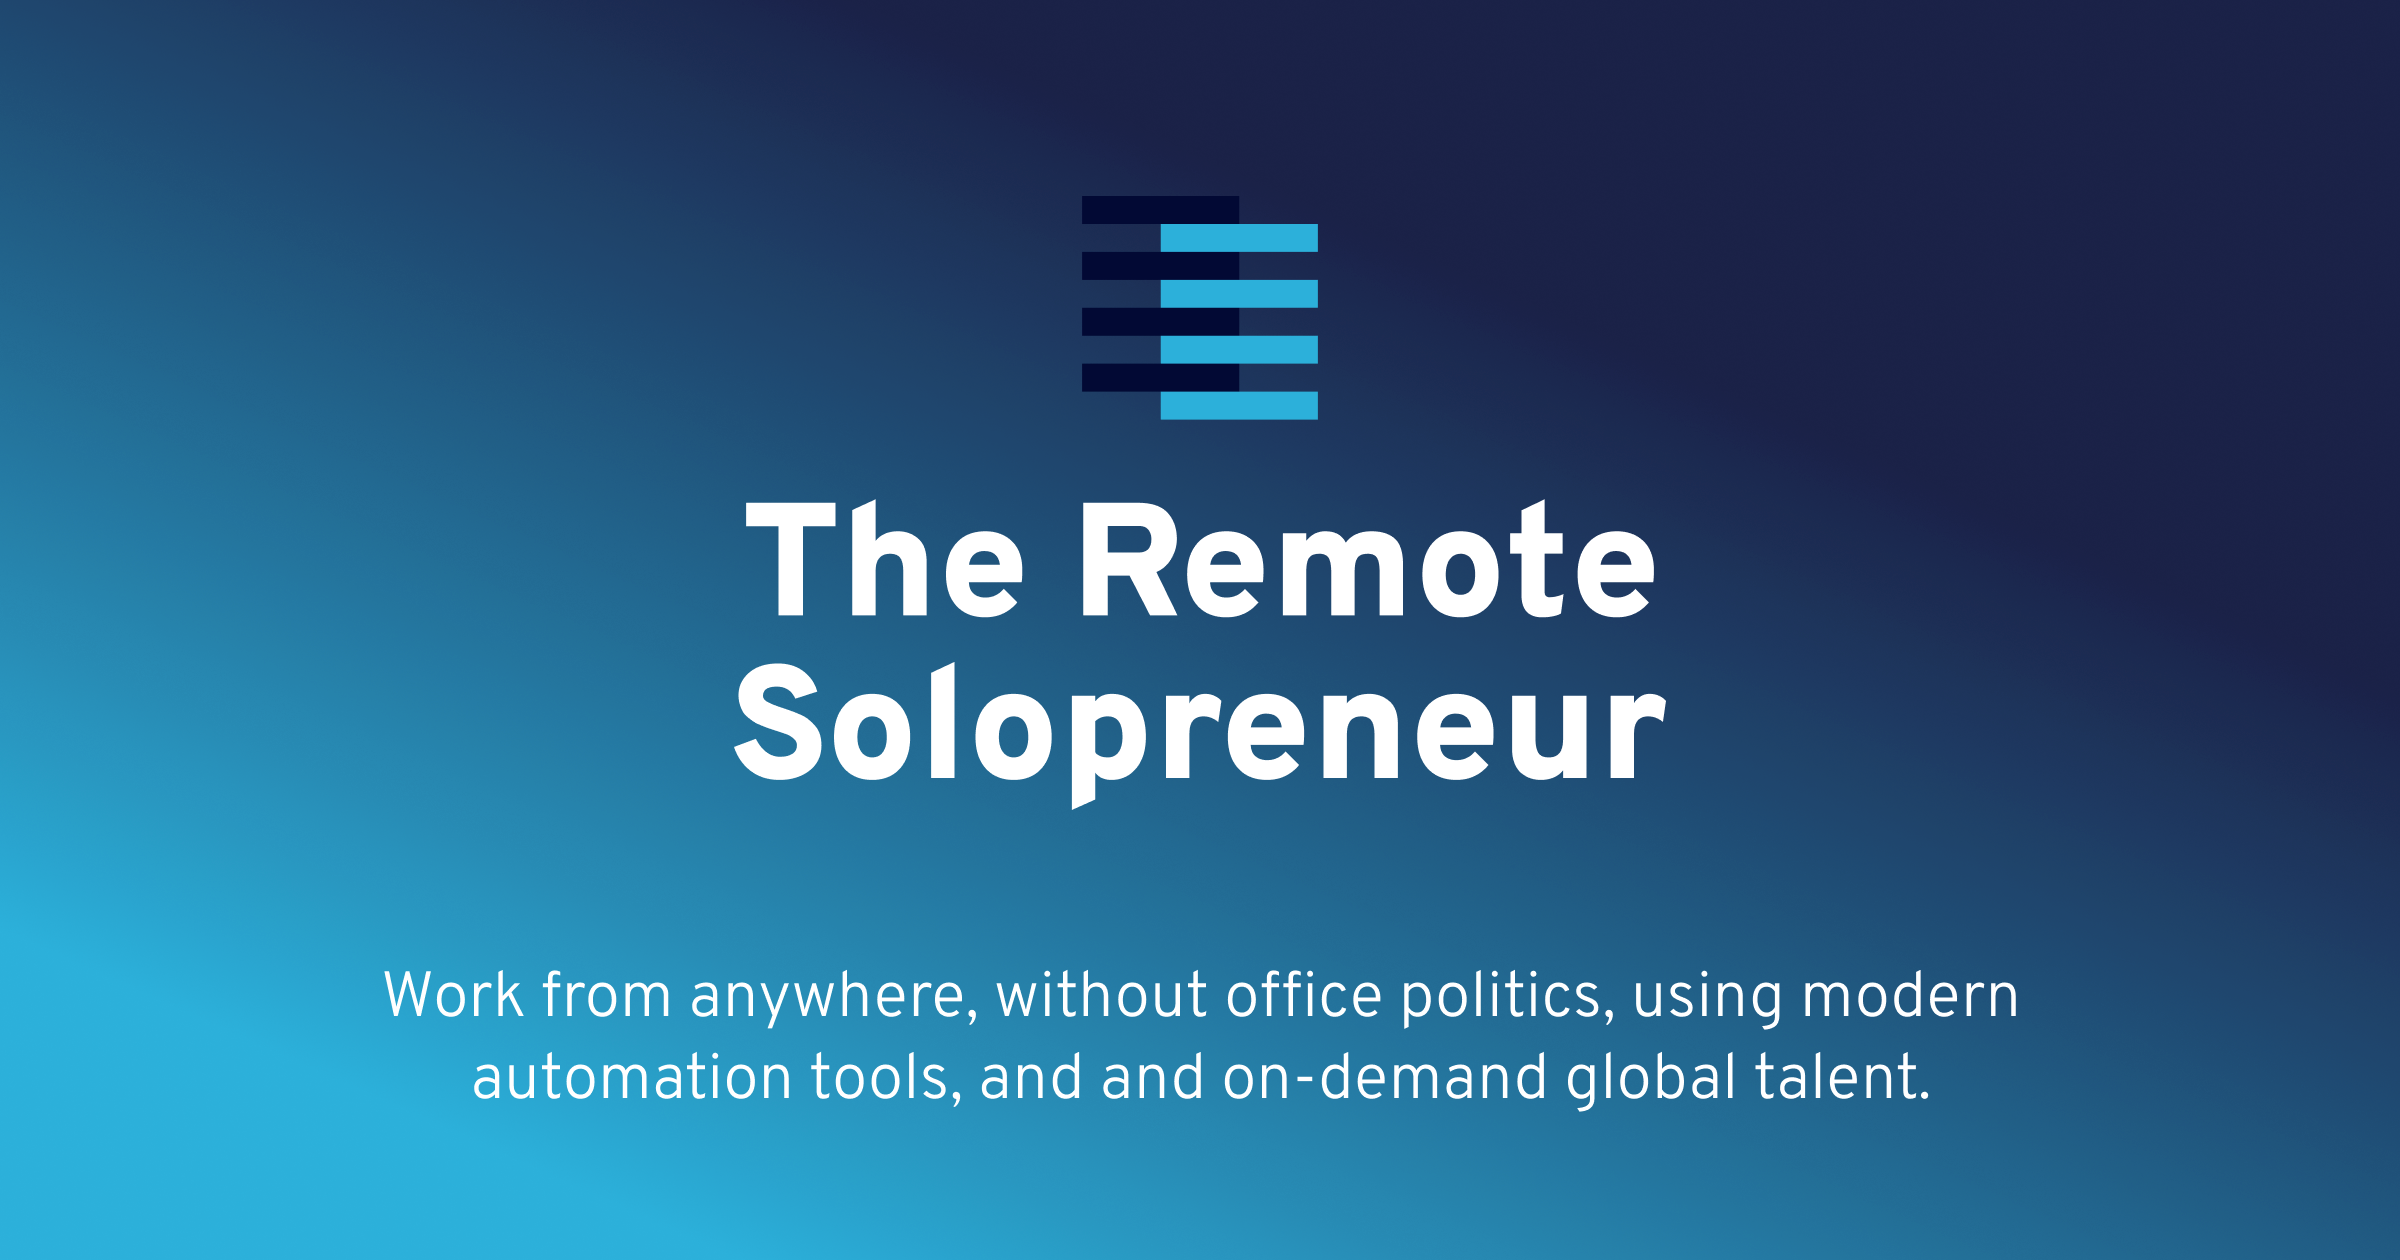 The Remote Solopreneur